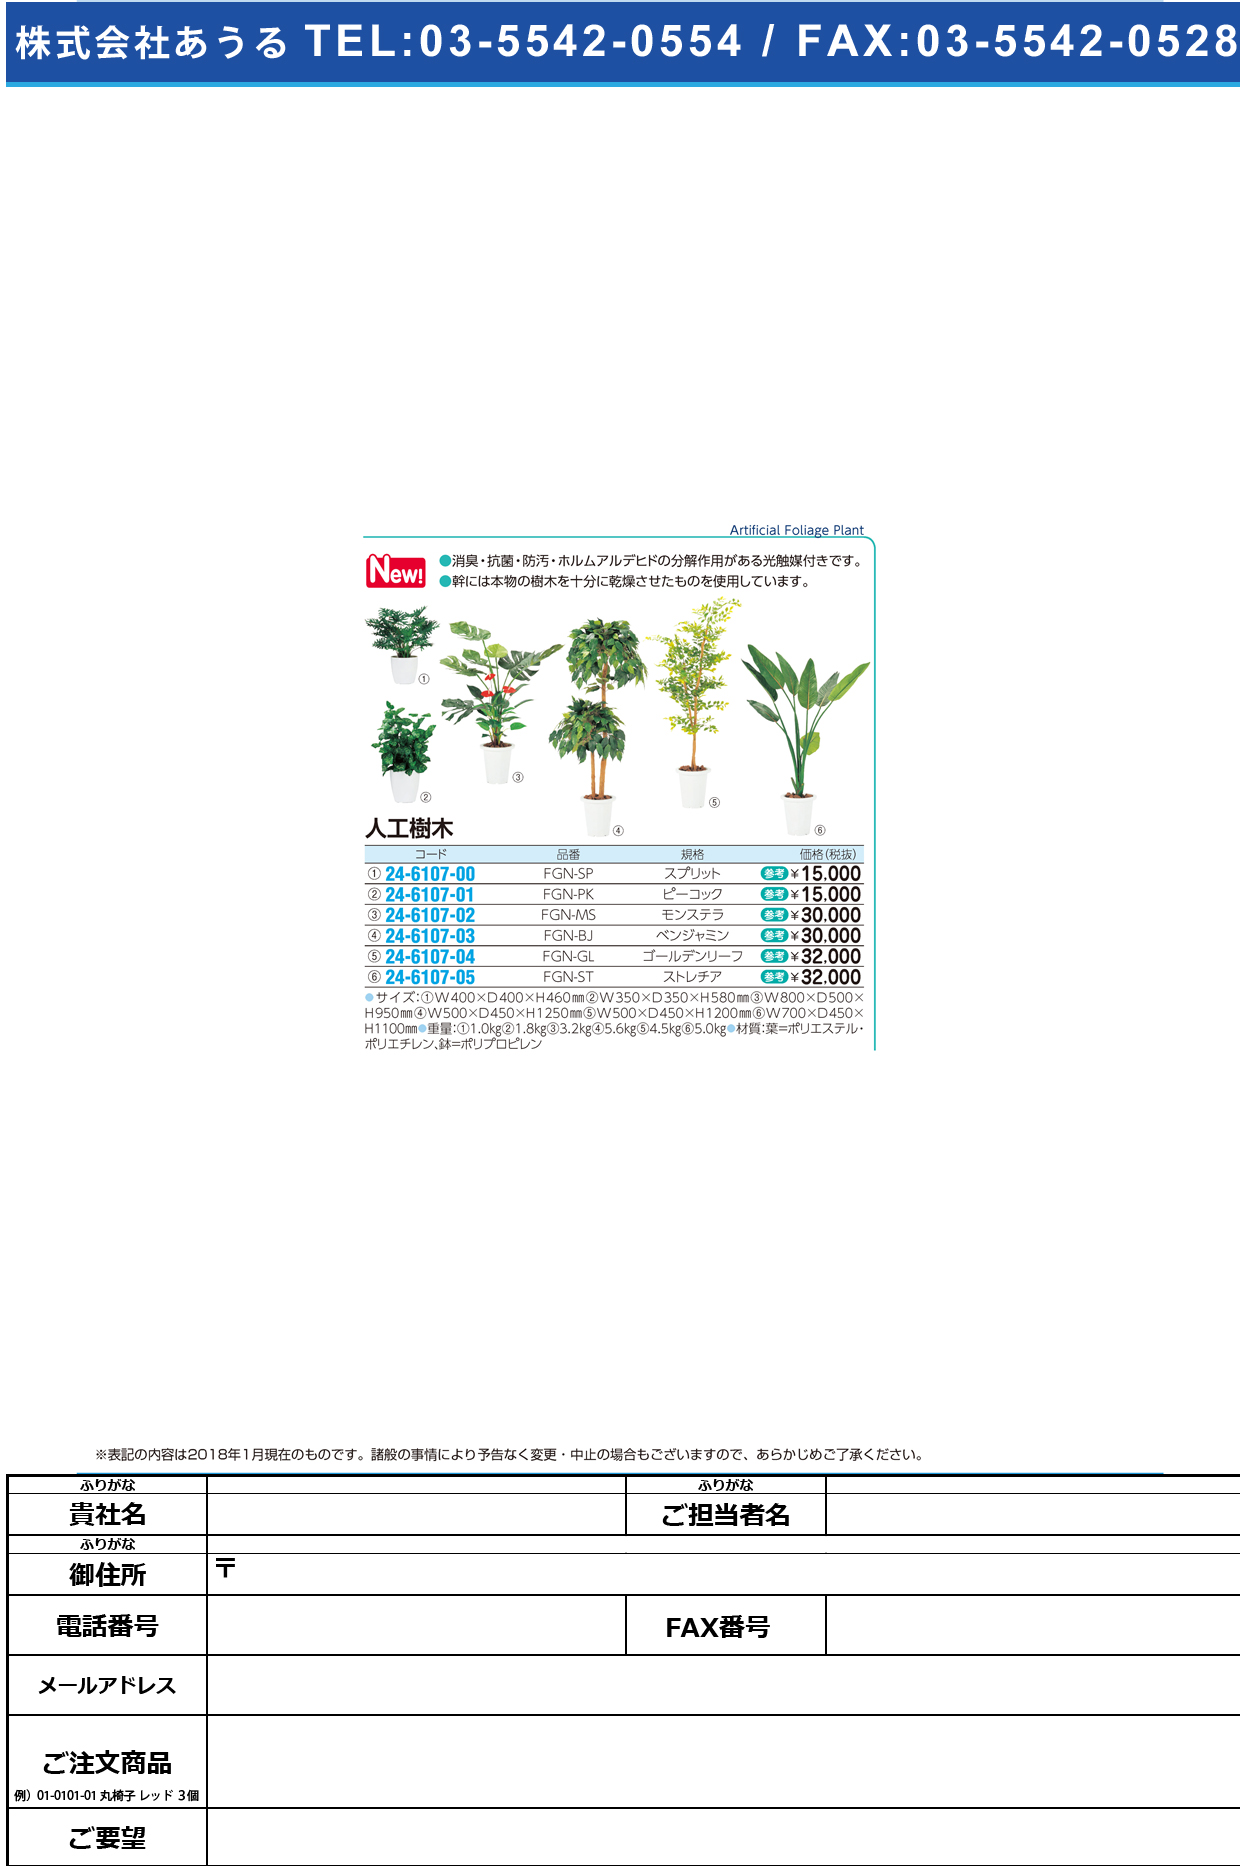 (24-6107-03)人工樹木 FGN-BJ(ﾍﾞﾝｼﾞｬﾐﾝ) ｼﾞﾝｺｳｼﾞｭﾓｸ【1個単位】【2019年カタログ商品】